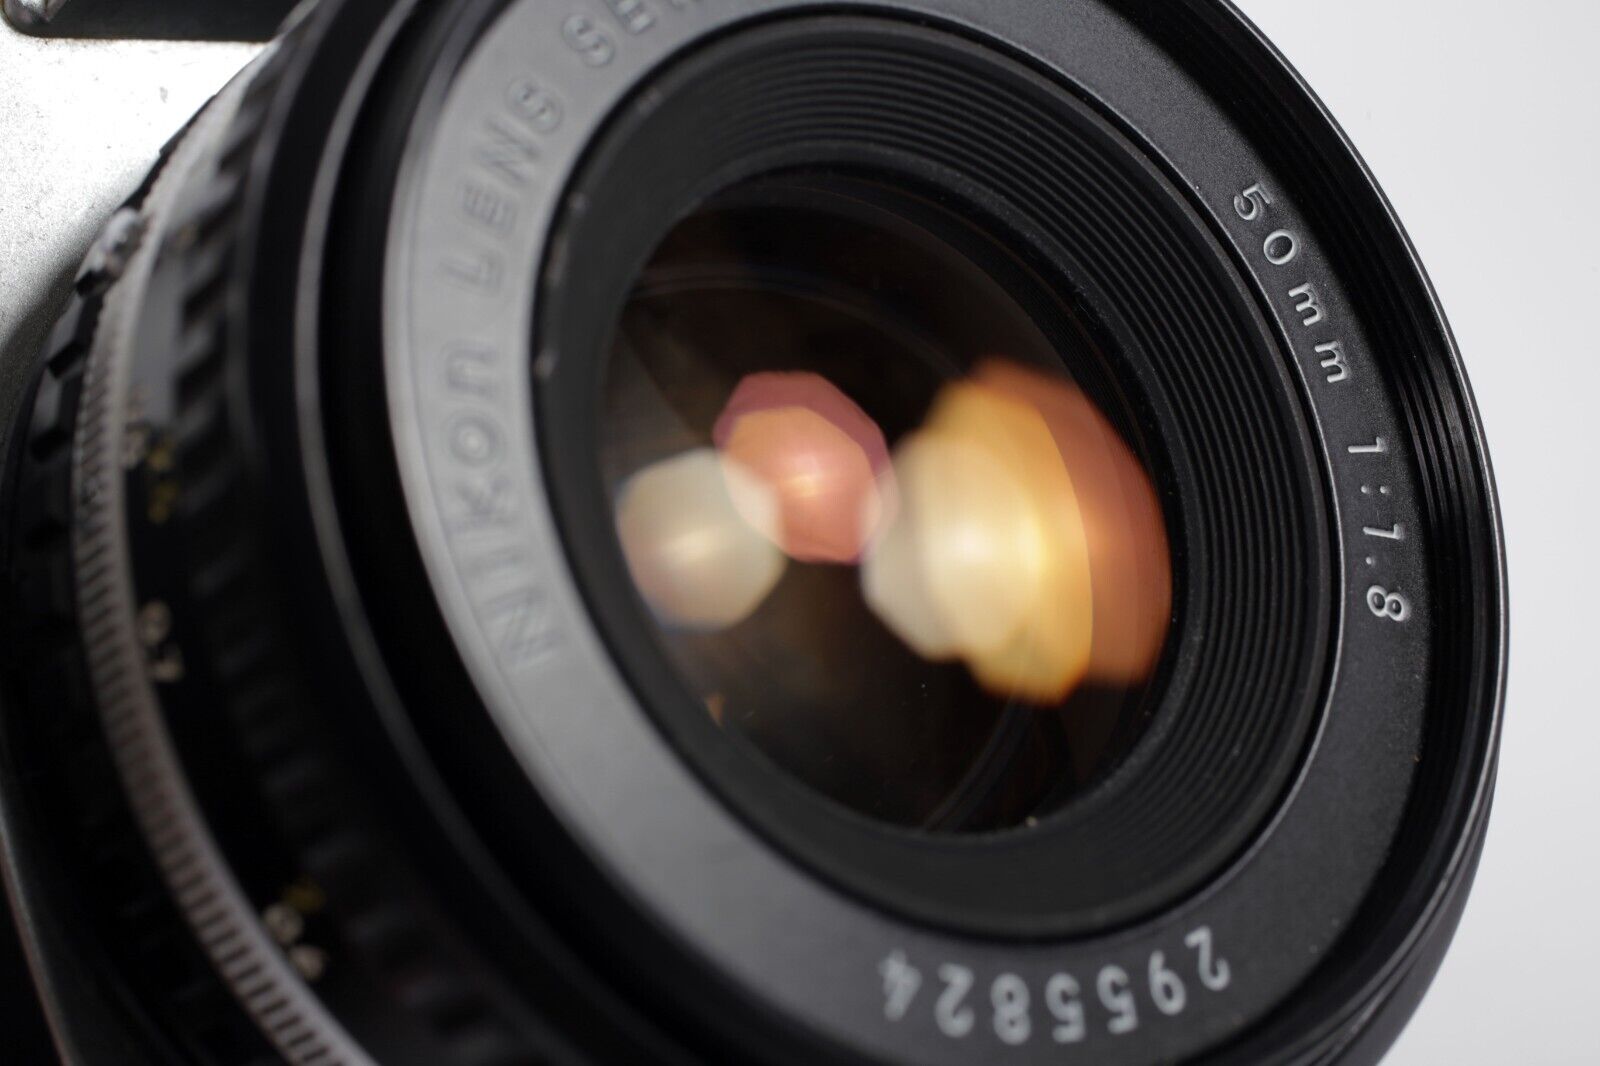 Nikon FE2 35mm SLR Film Camera with 50mm F1.8 lens #890 | CatLABS